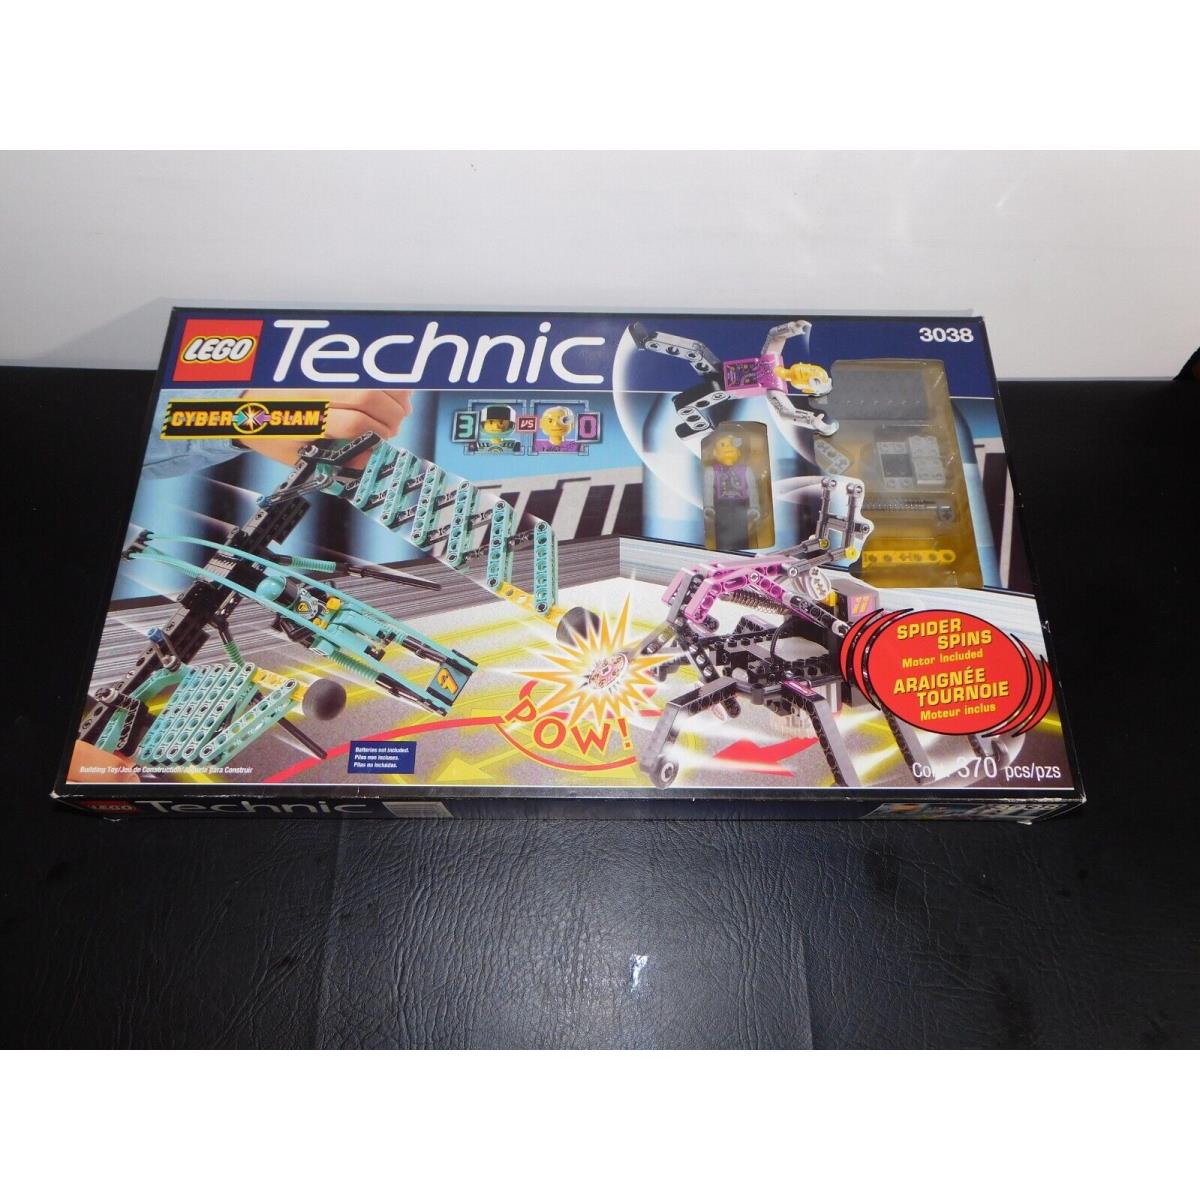 Lego Technic Cyber Slam 3038 1998 370 Pieces